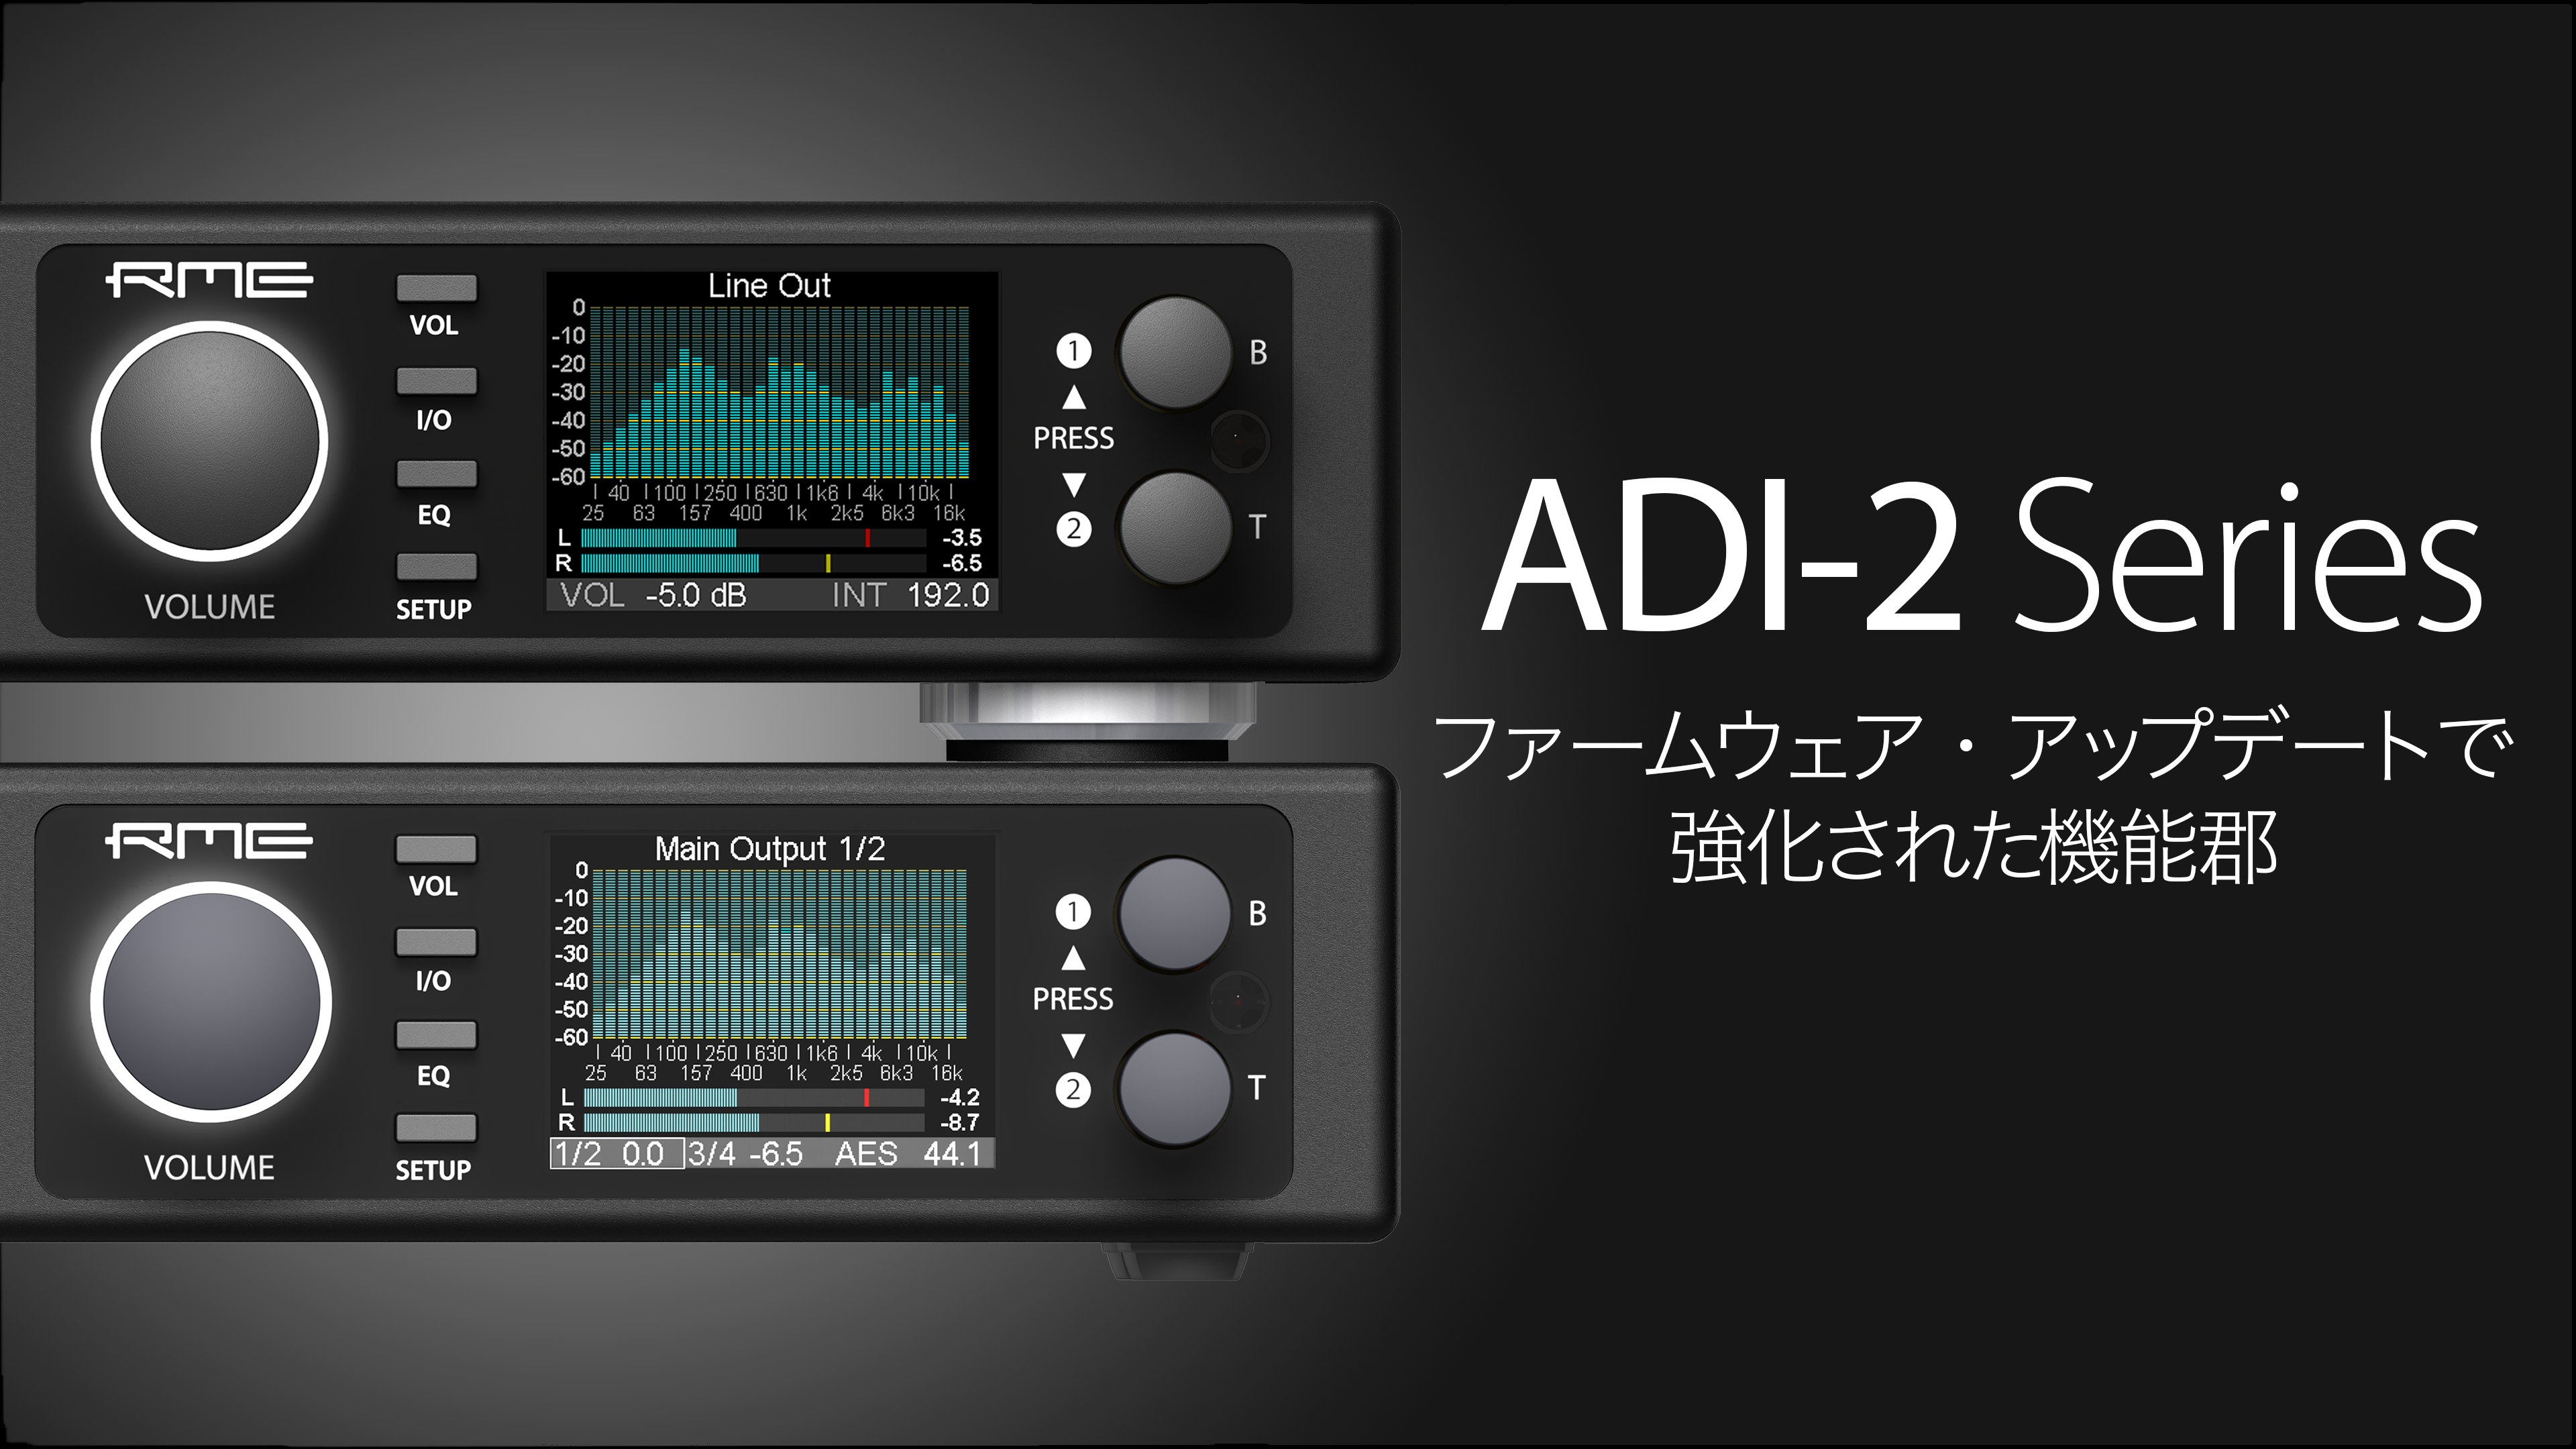 ADI-2 Seriesの強化された機能群